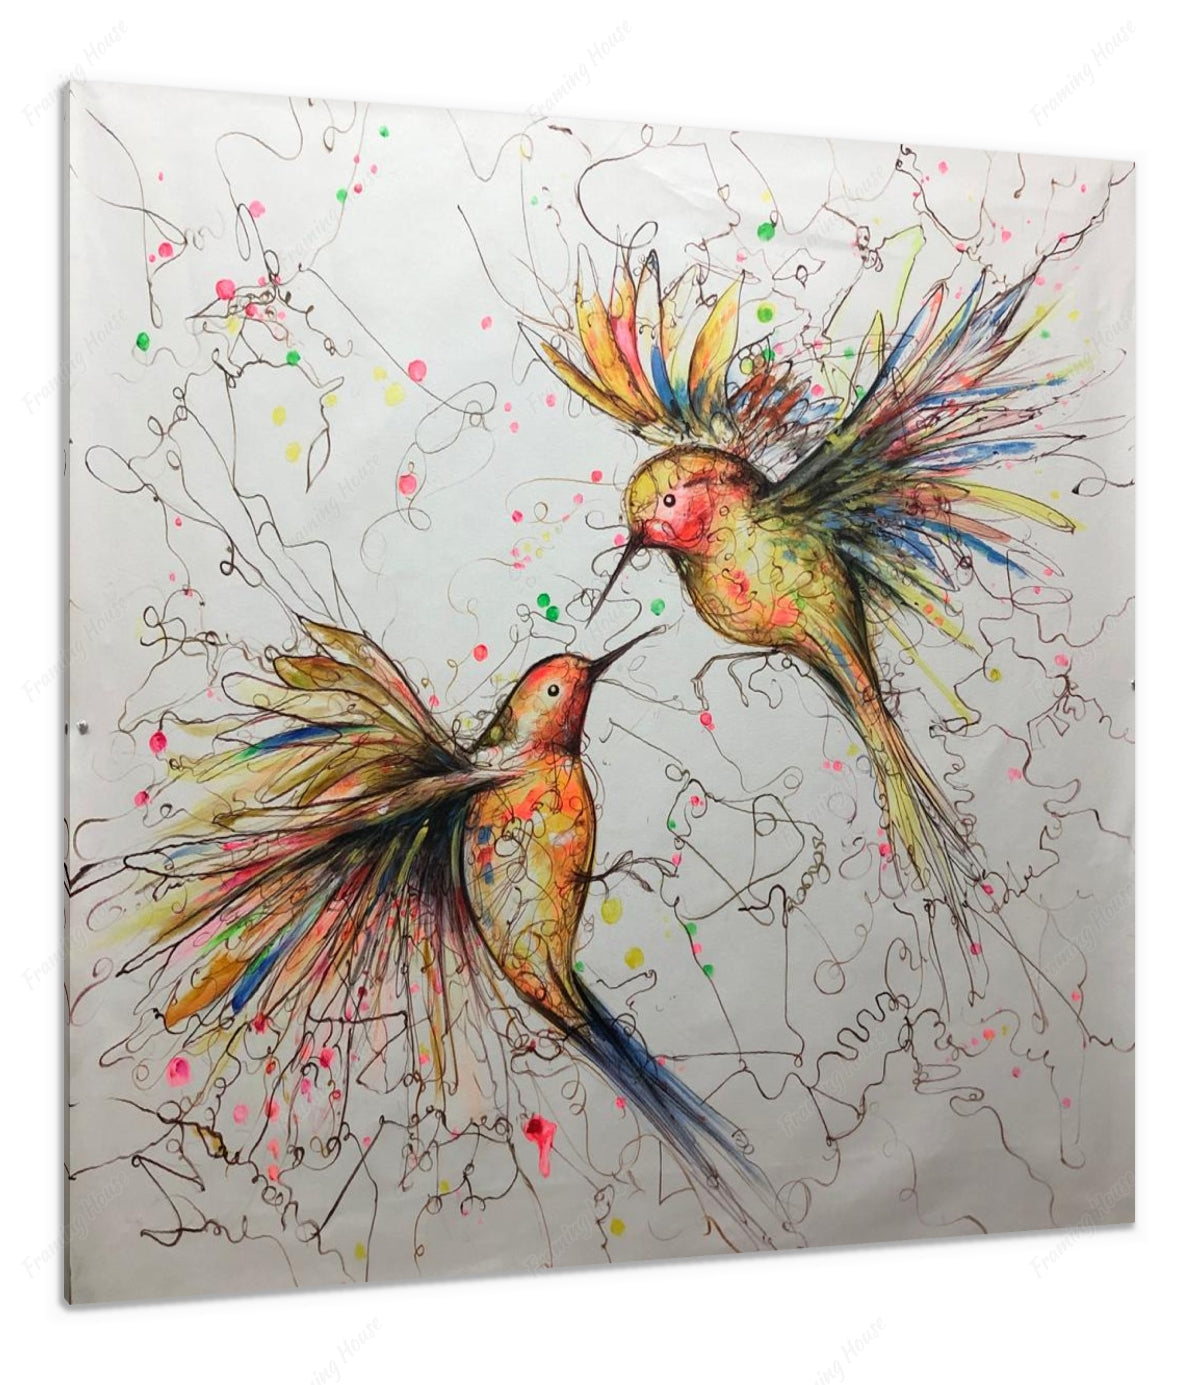 abstract  handmade bird   Wall art paintings